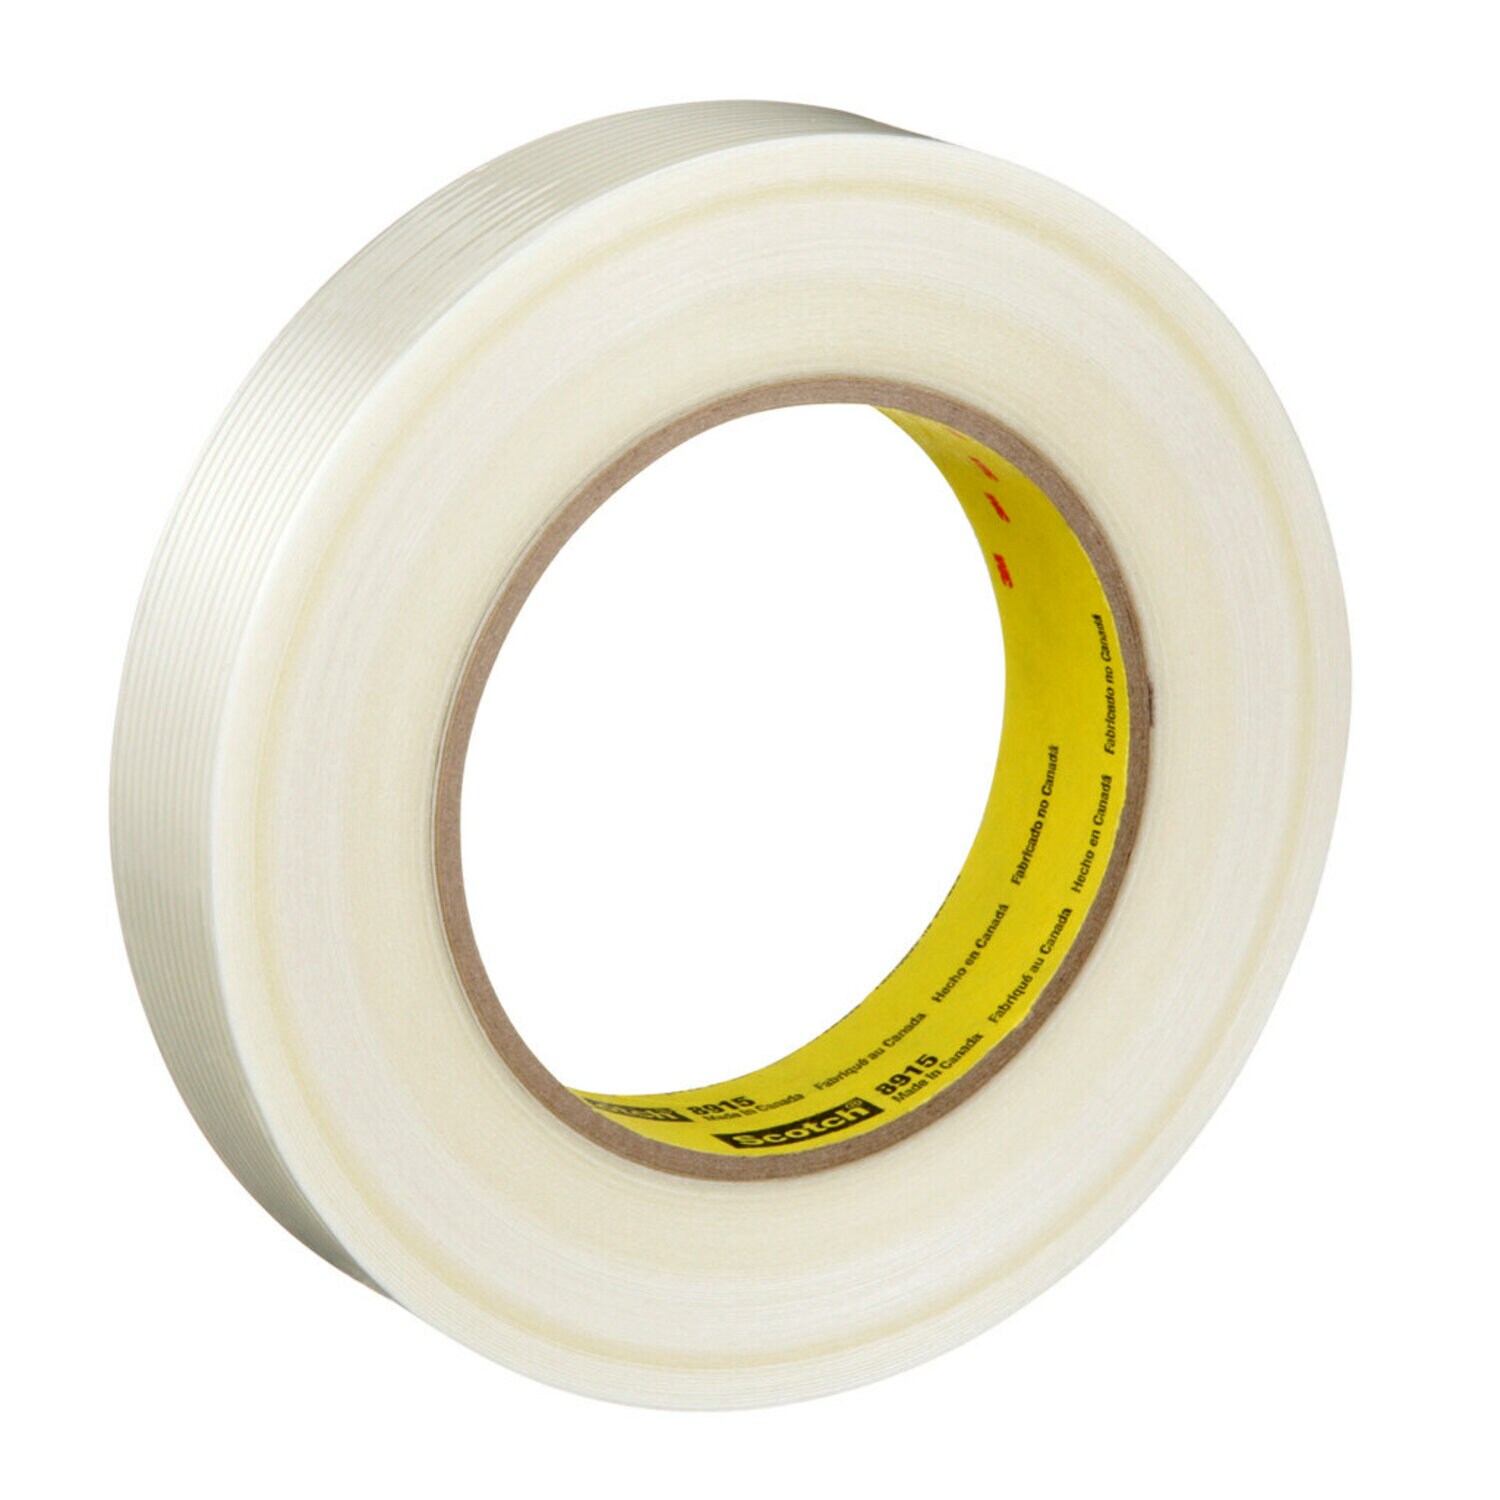 7000048606 - Scotch Filament Tape 8915, Clean Removal, 24 mm x 55 m, 6 mil, 36
Rolls/Case